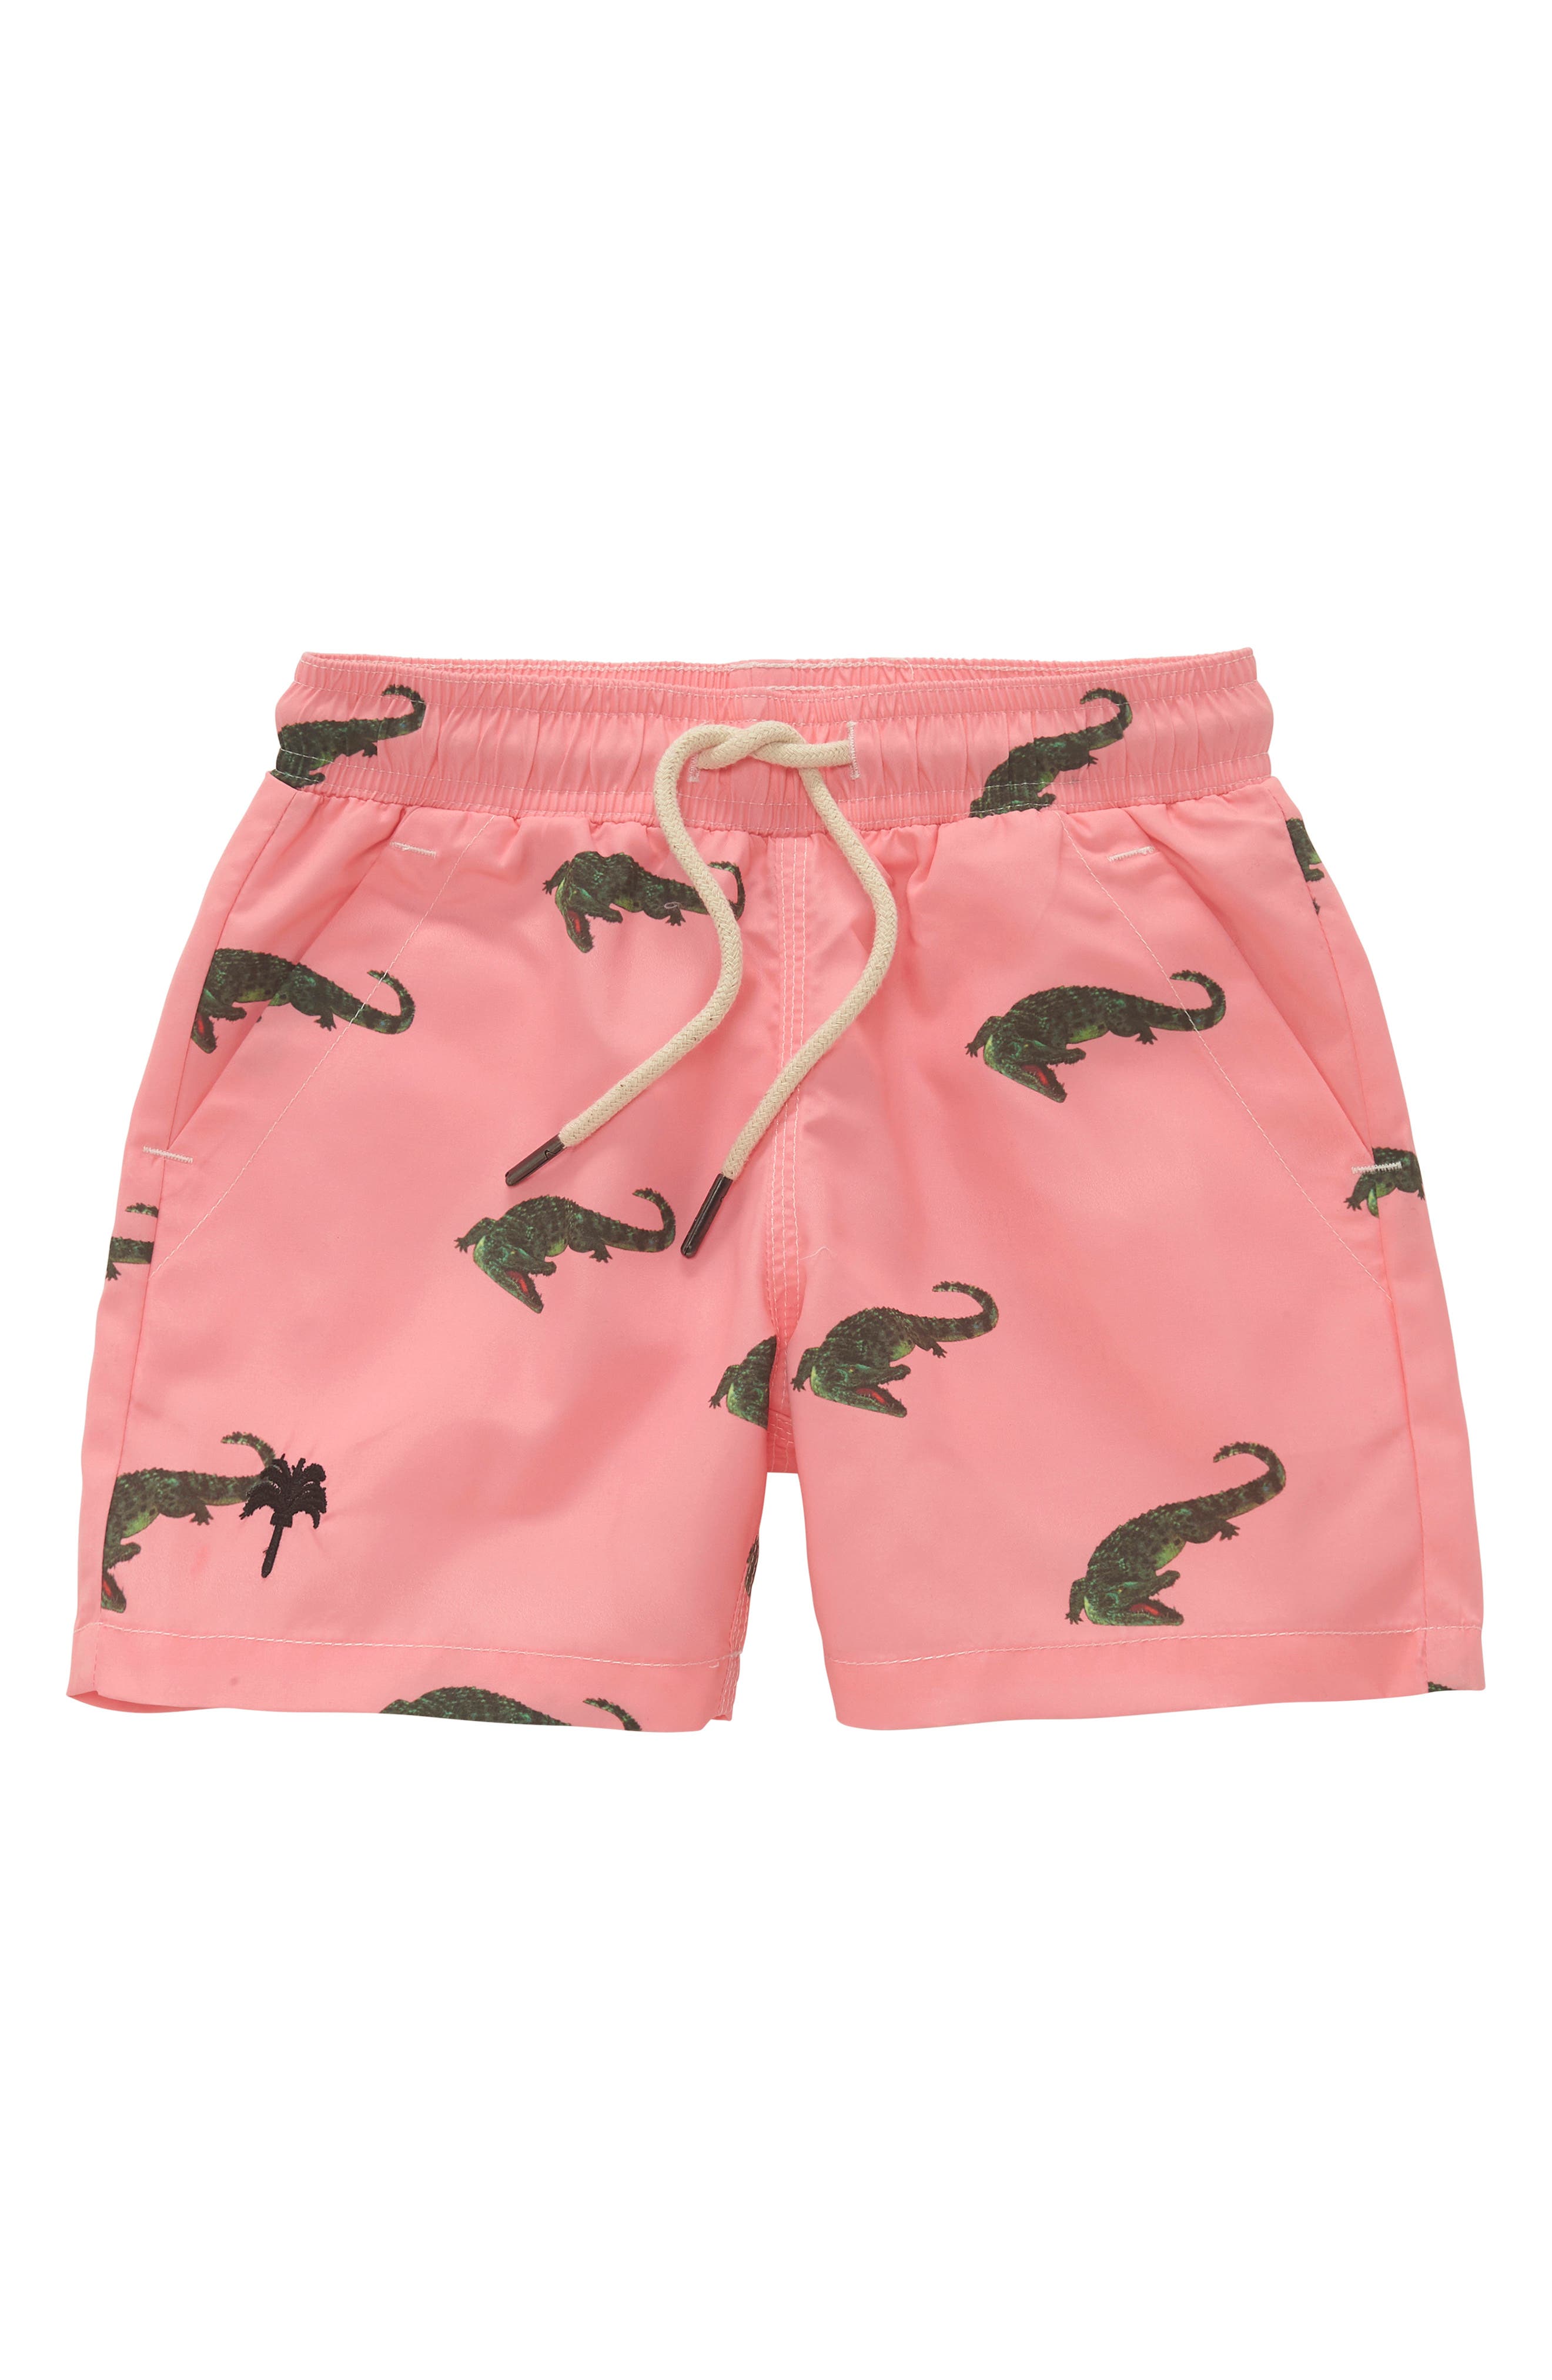 Little Boys Fluorescent Pink CHIMP Swim Shorts NWT 